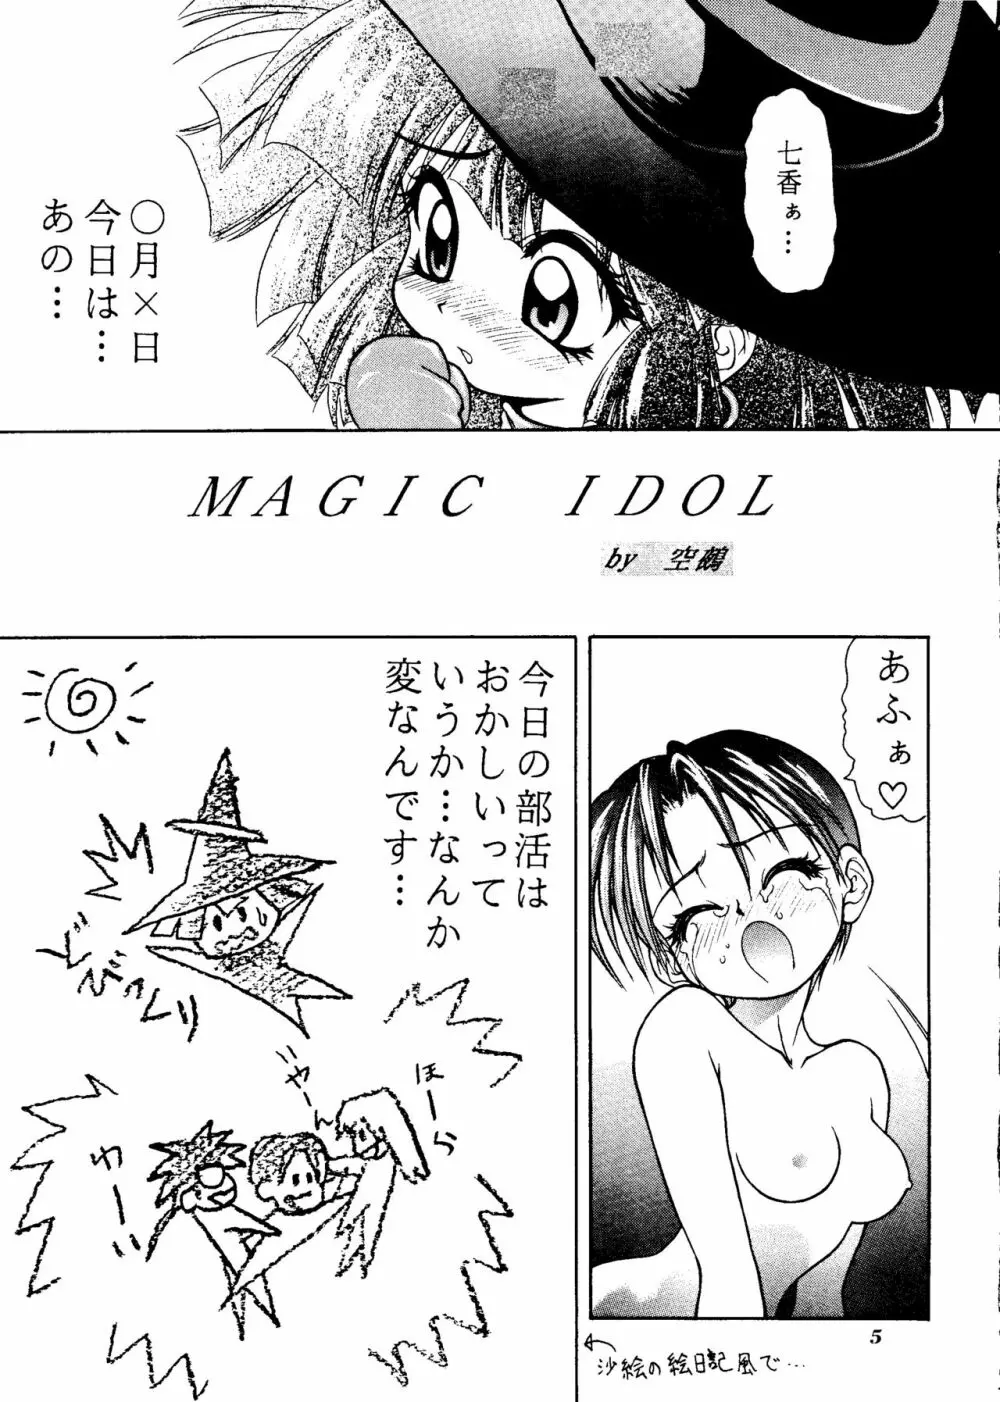 MAGIC-BOX - page4